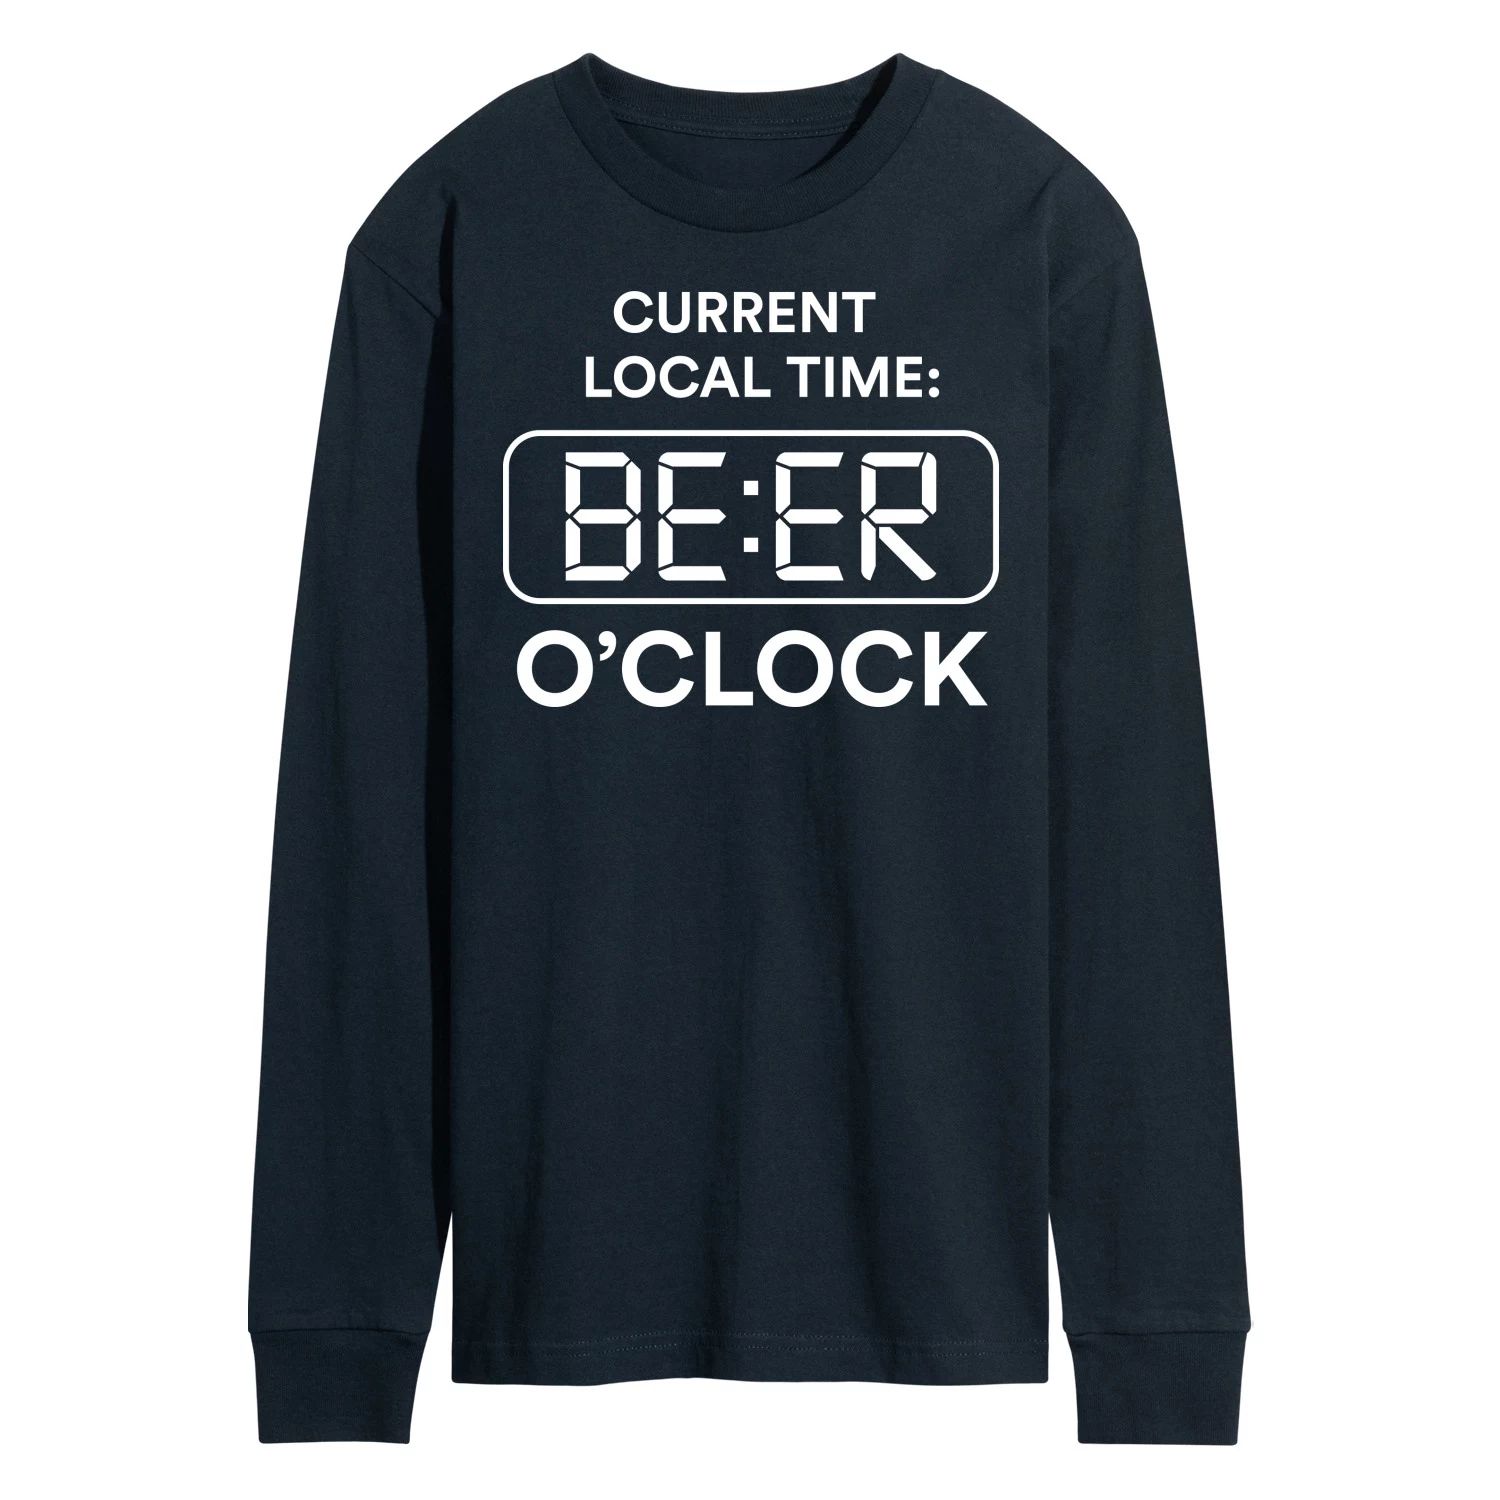 Мужская футболка с рисунком Beer O'Clock Licensed Character